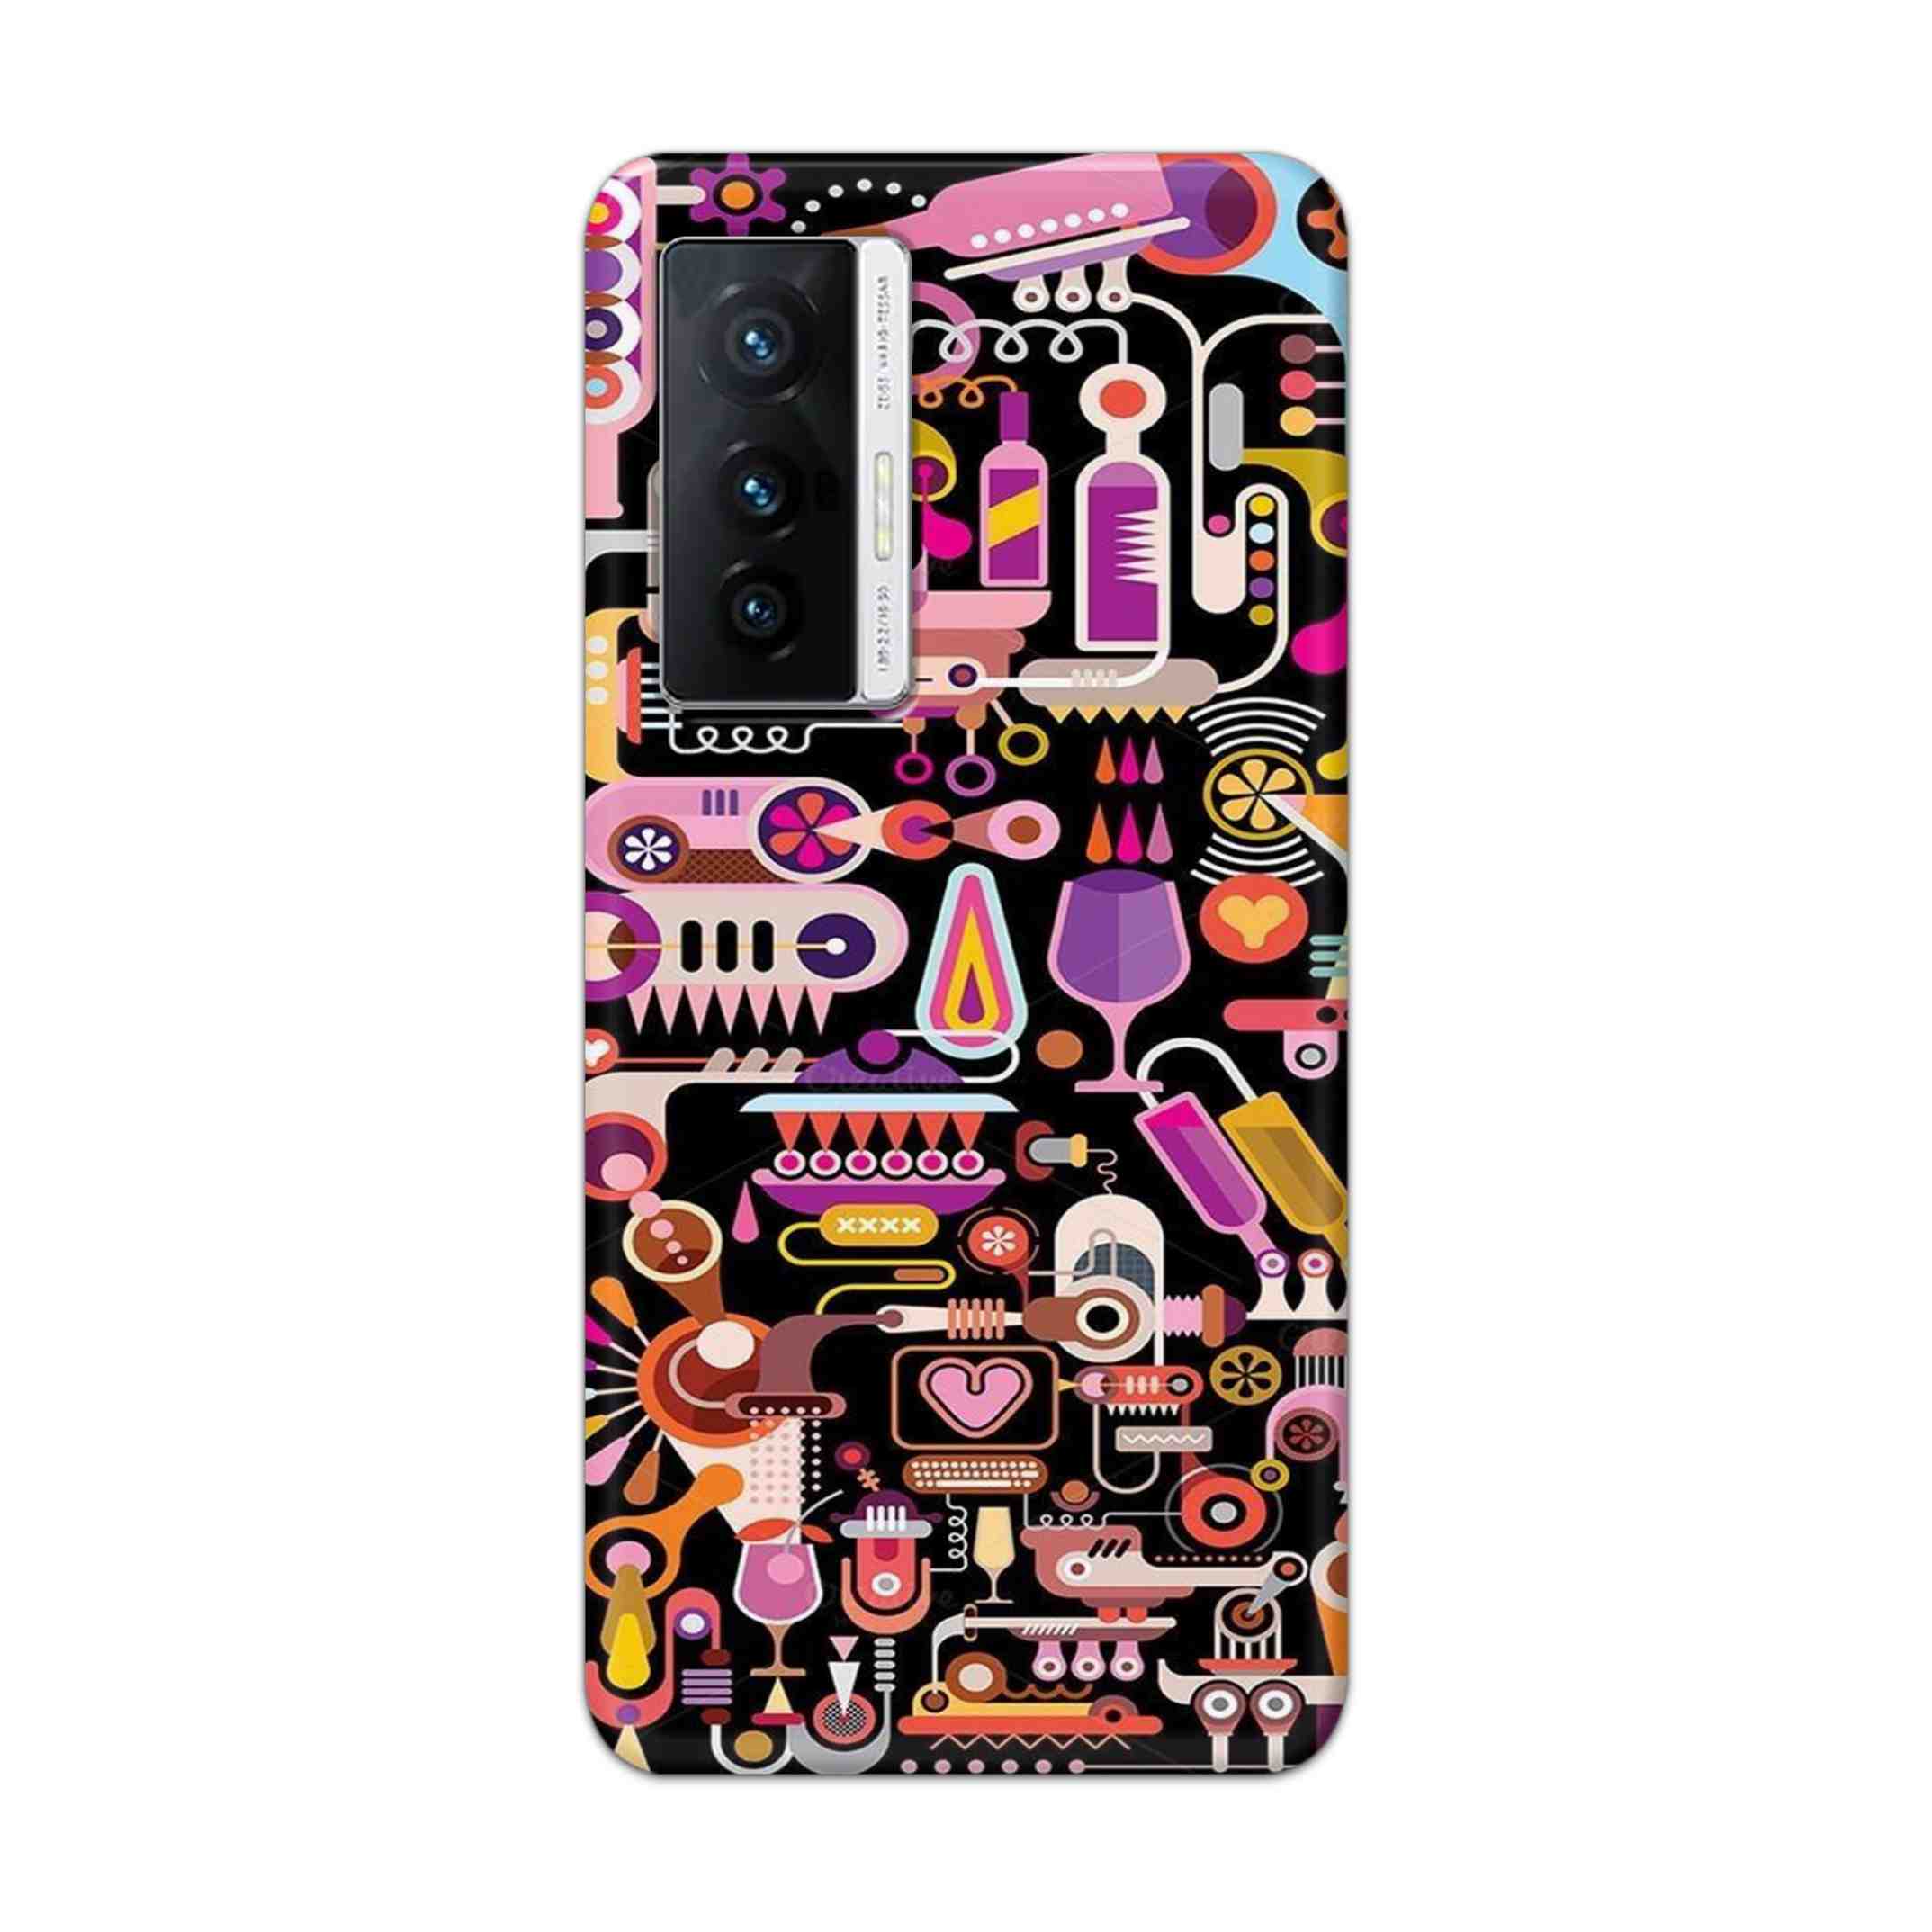 Buy Lab Art Hard Back Mobile Phone Case Cover For Vivo X70 Online